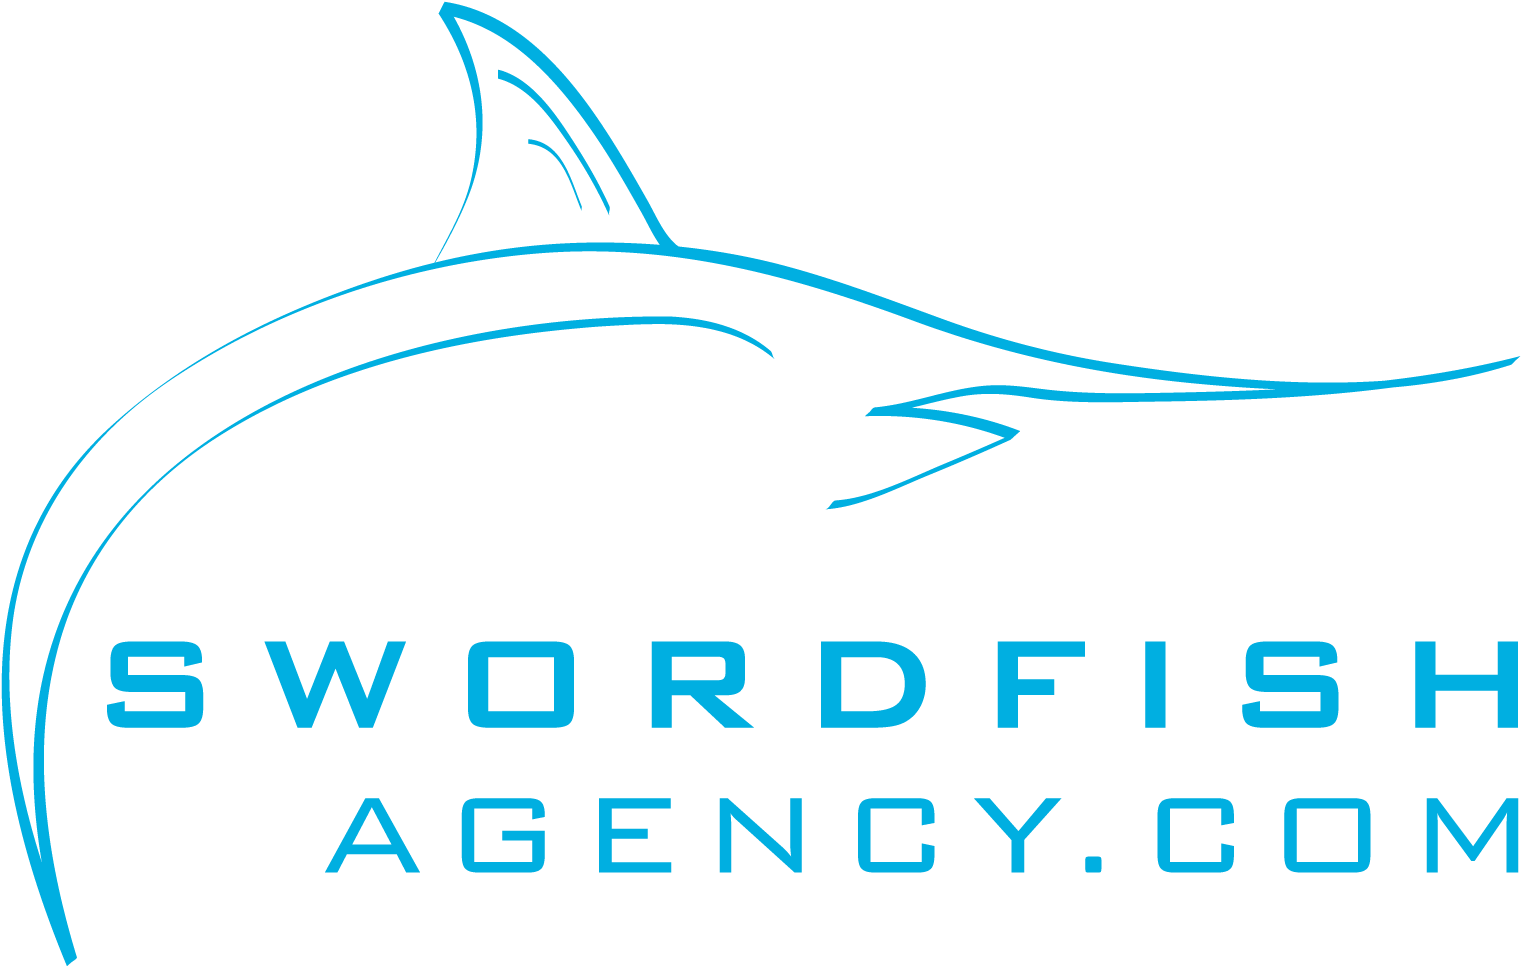 Swordfish Agency Logo PNG